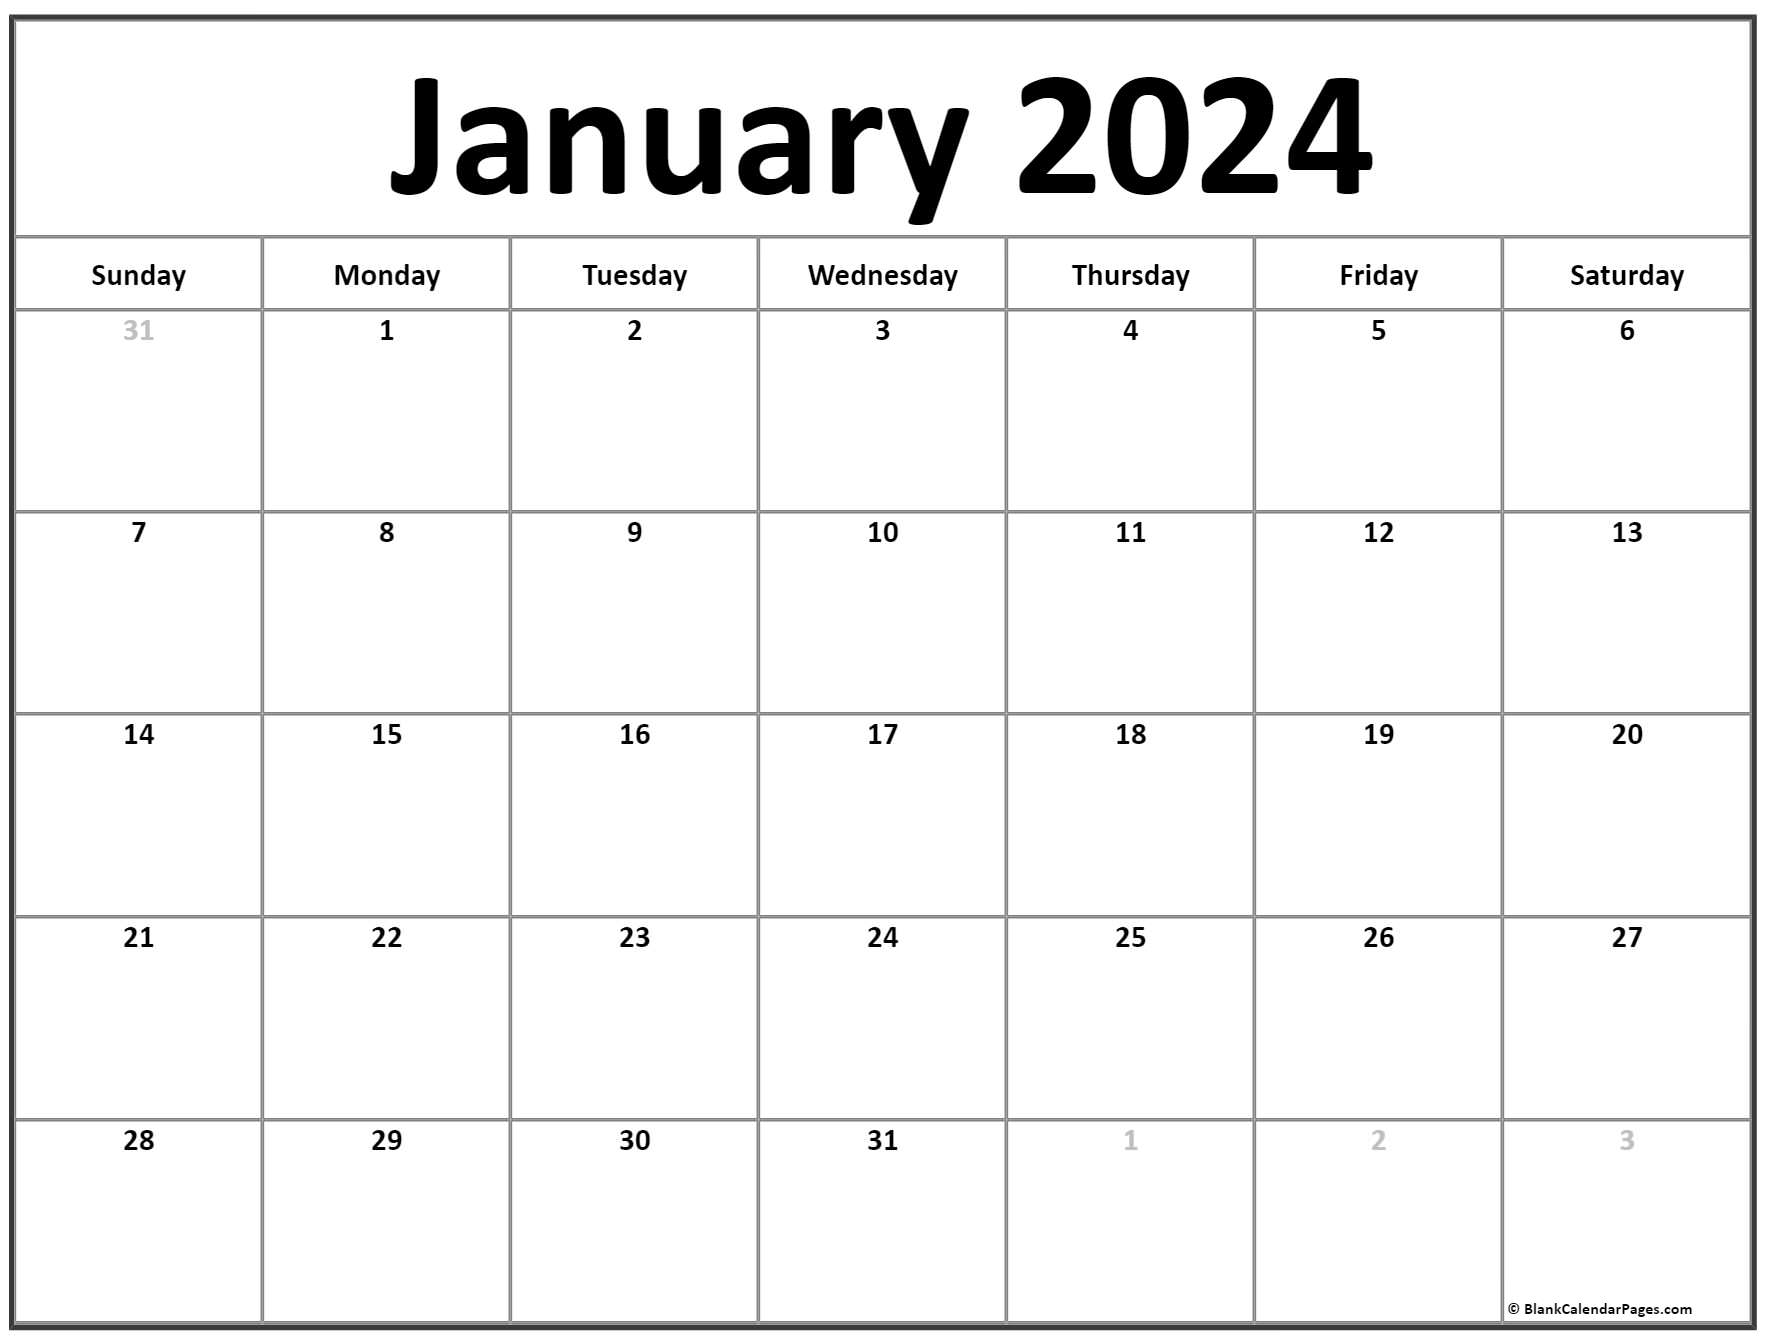 January 2020 calendar free printable monthly calendars